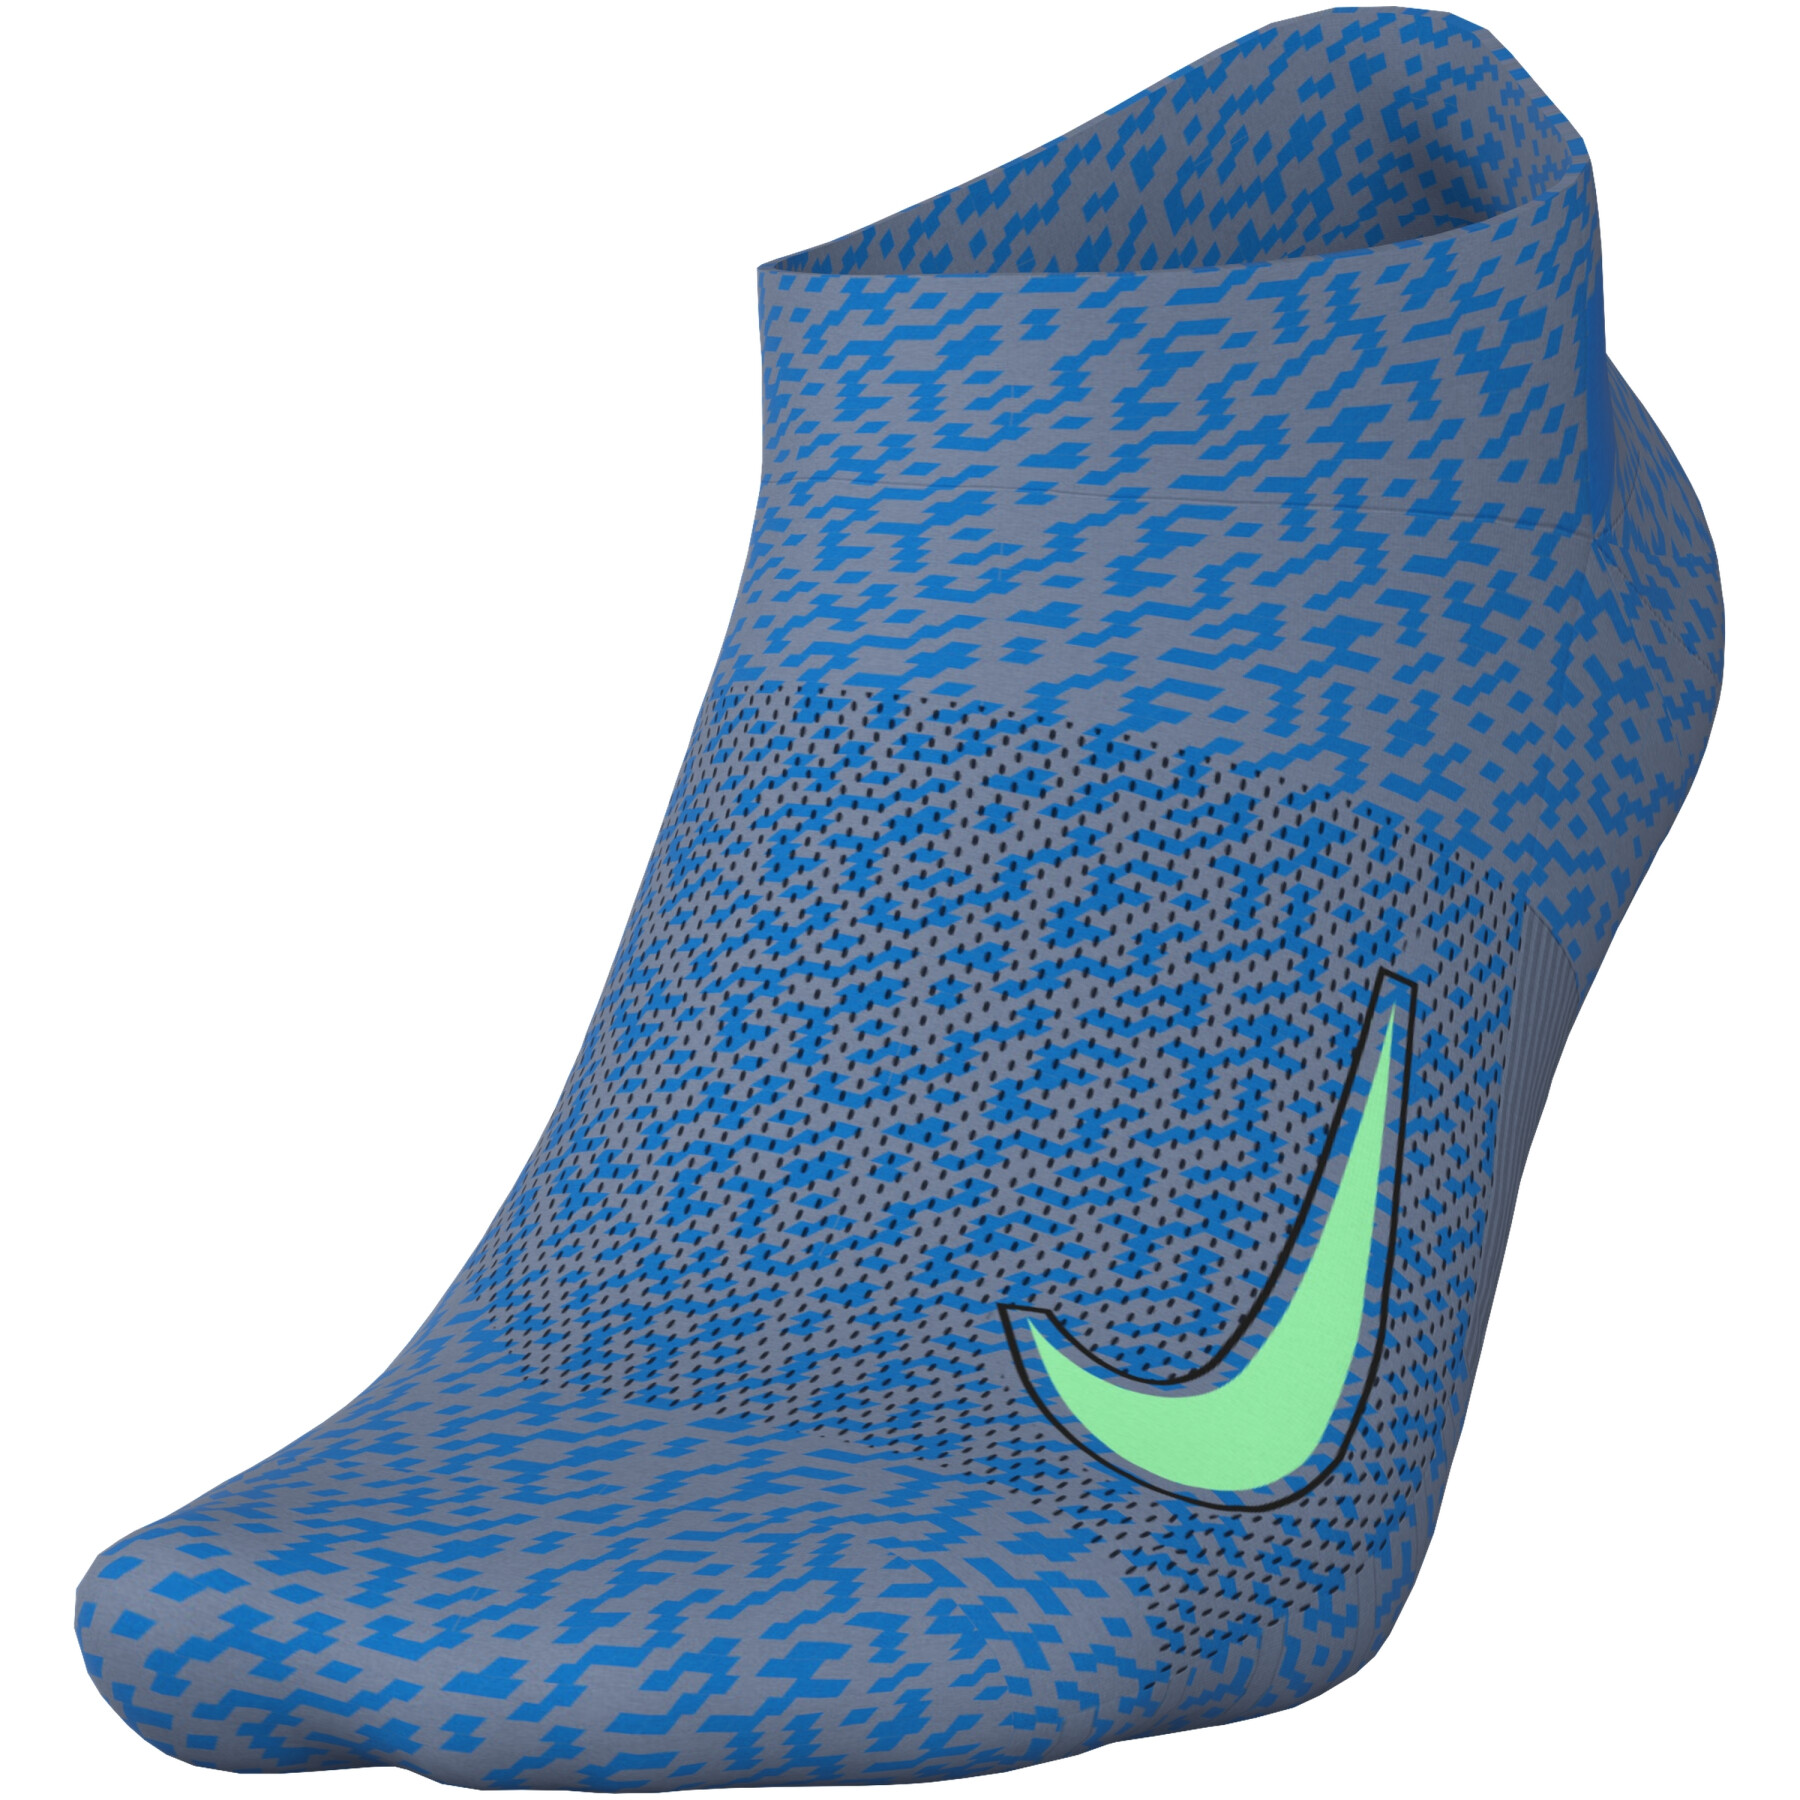 Invisible socks Nike Multiplier (x2)